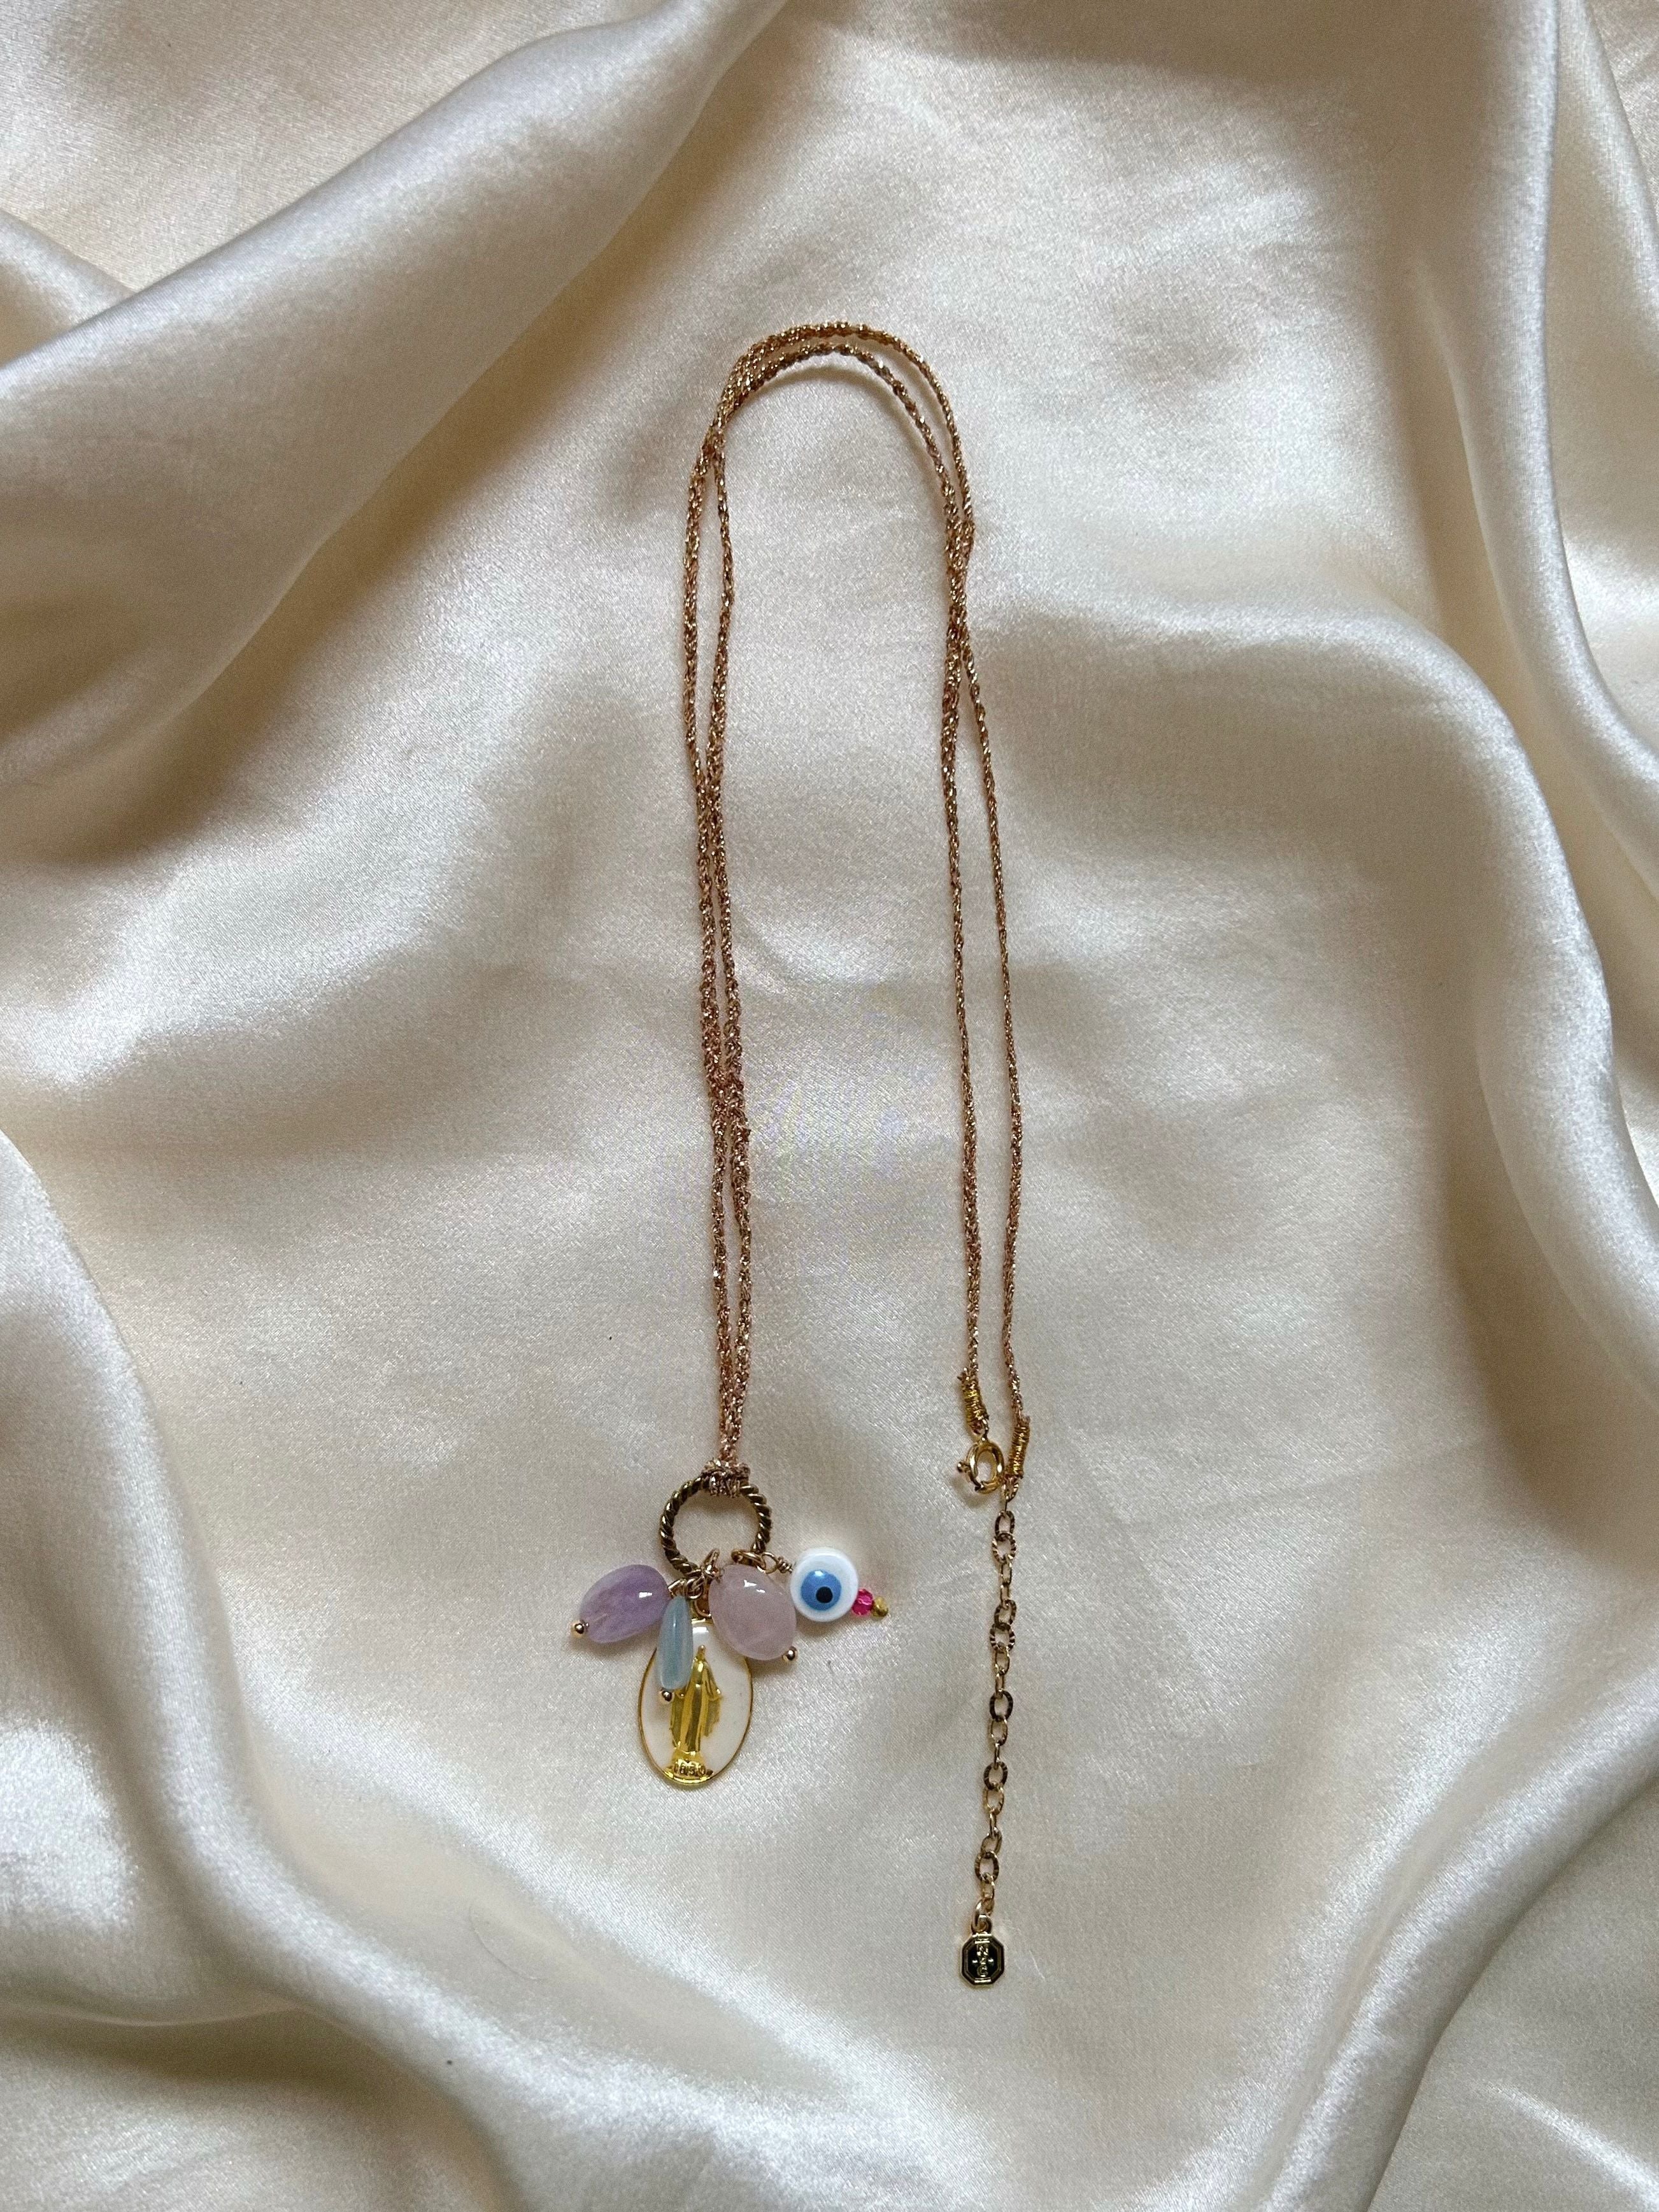 #bijoux #necklace #collier #soft #perles #cristal #gold #oeil #bonheur #summer #glamour #santamaria